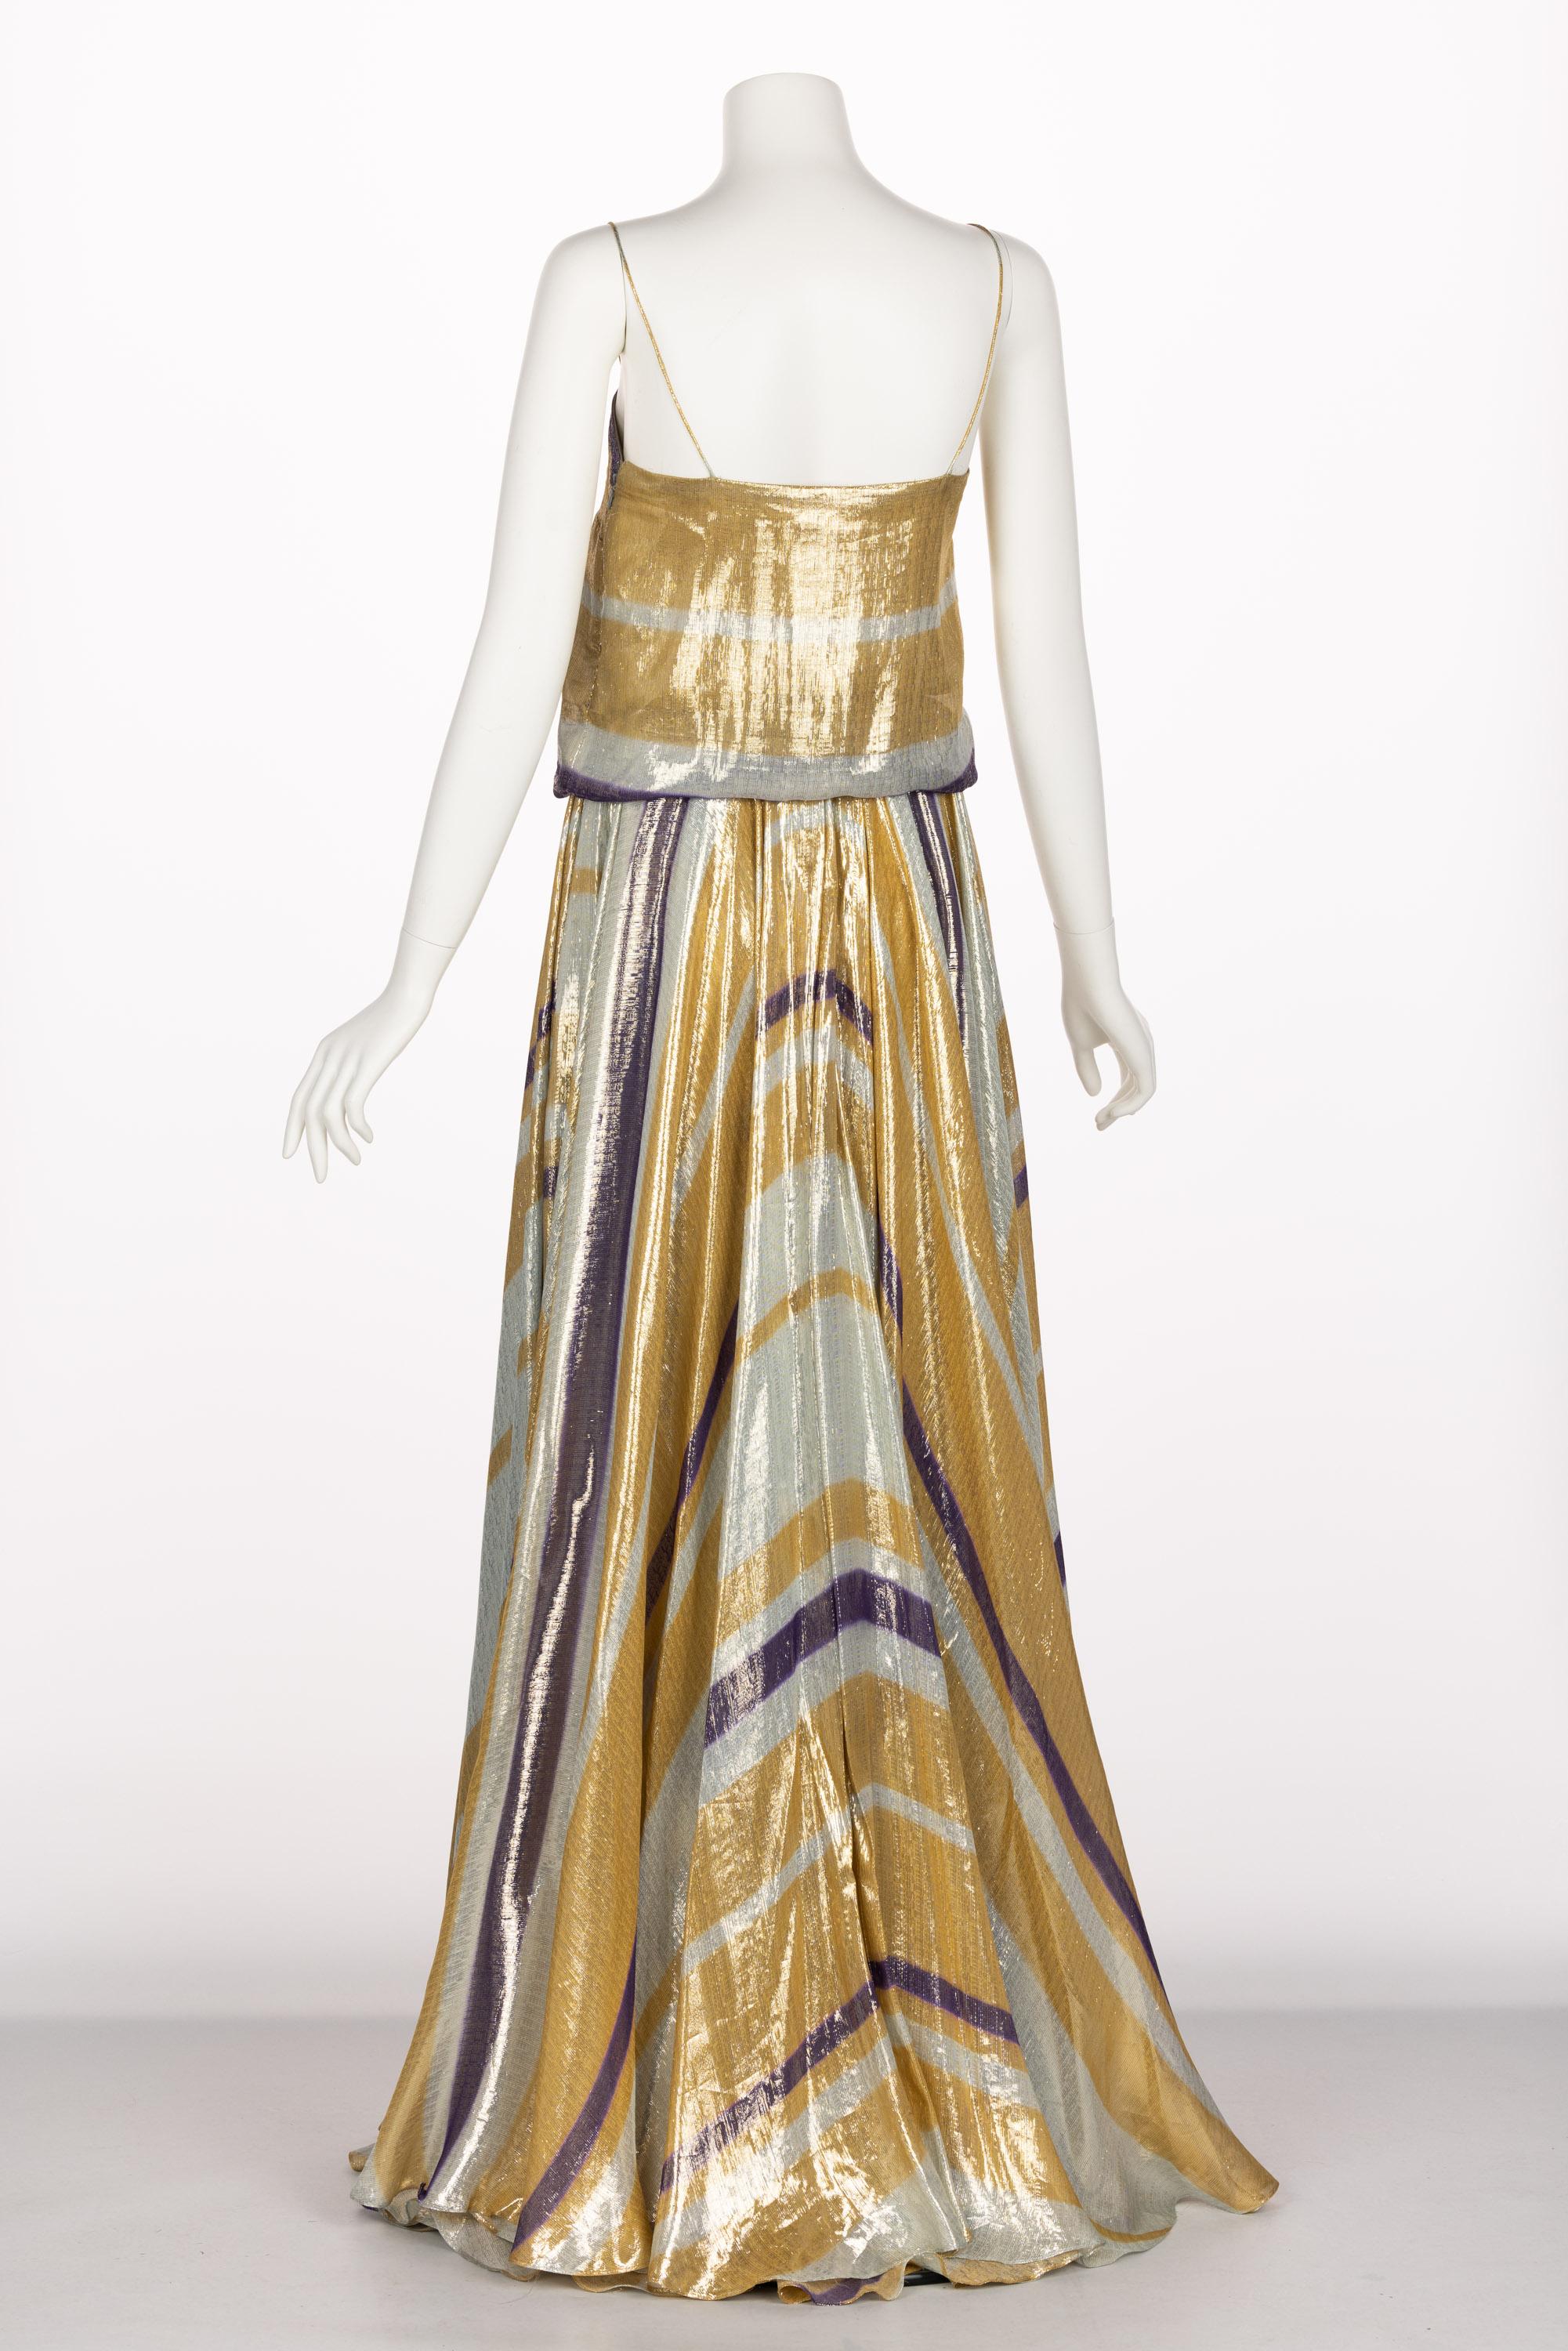 Women's Lanvin Alber Elbaz Resort 2012 Gold & Silver Gown